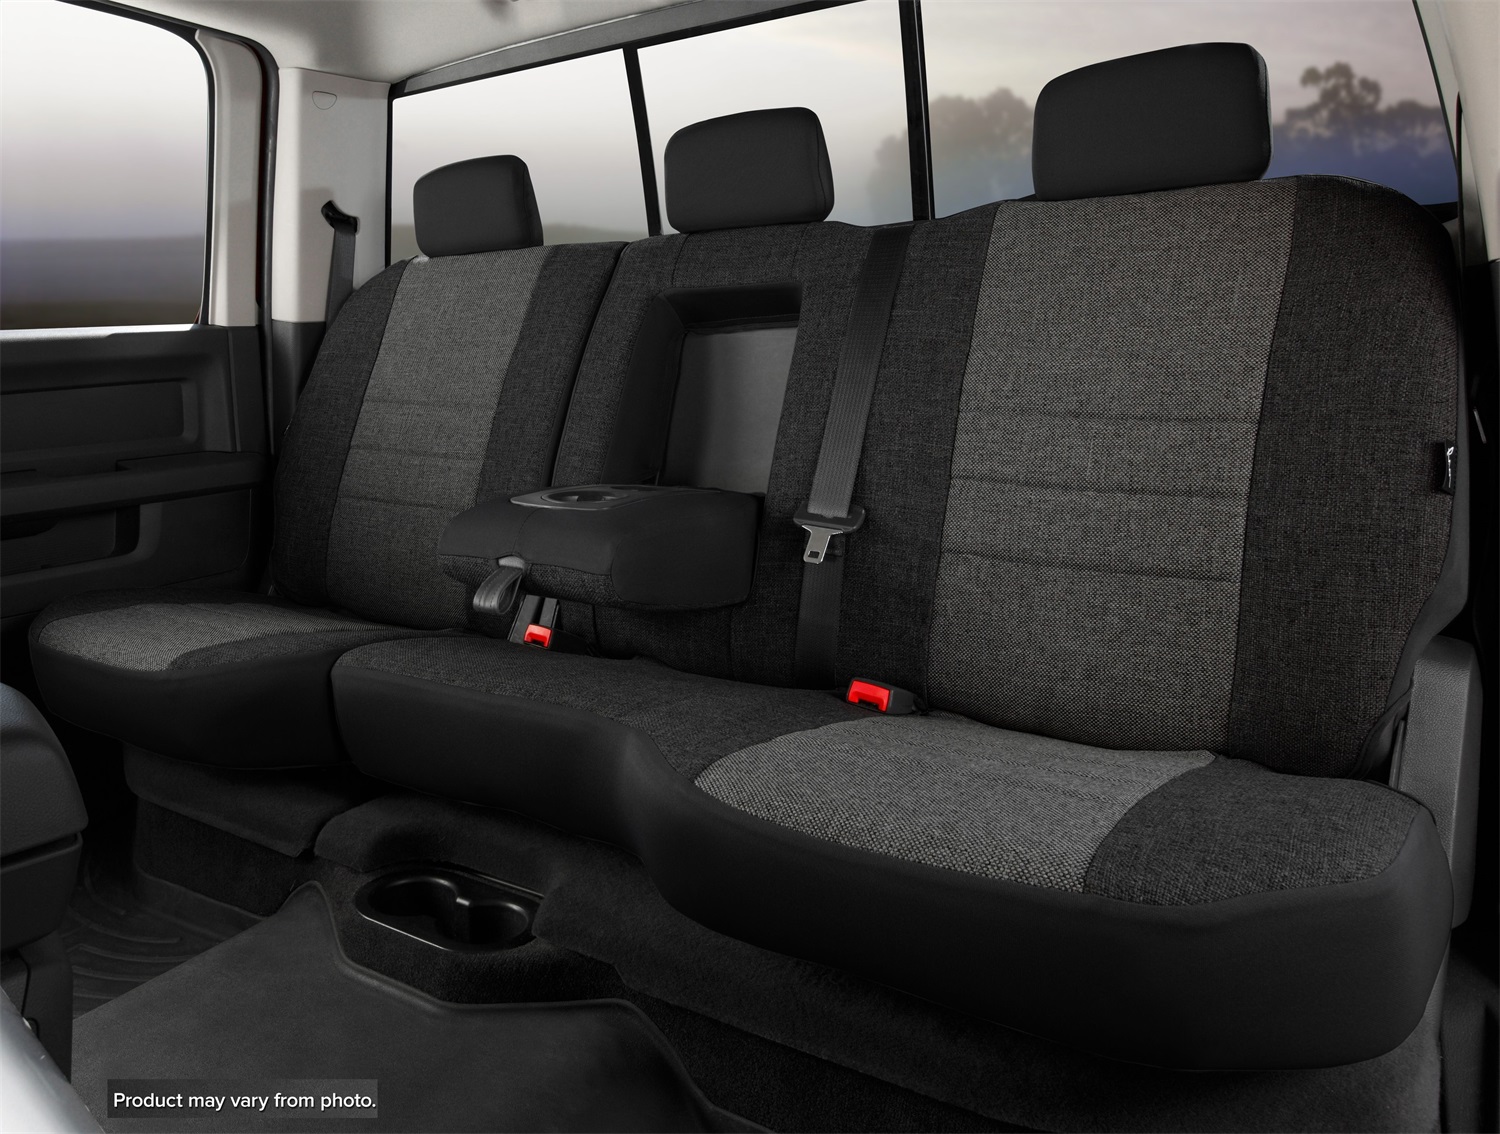 Fia Fia OE32-29CHARC Oe Custom Seat Cover Fits 10-15 Equinox Terrain